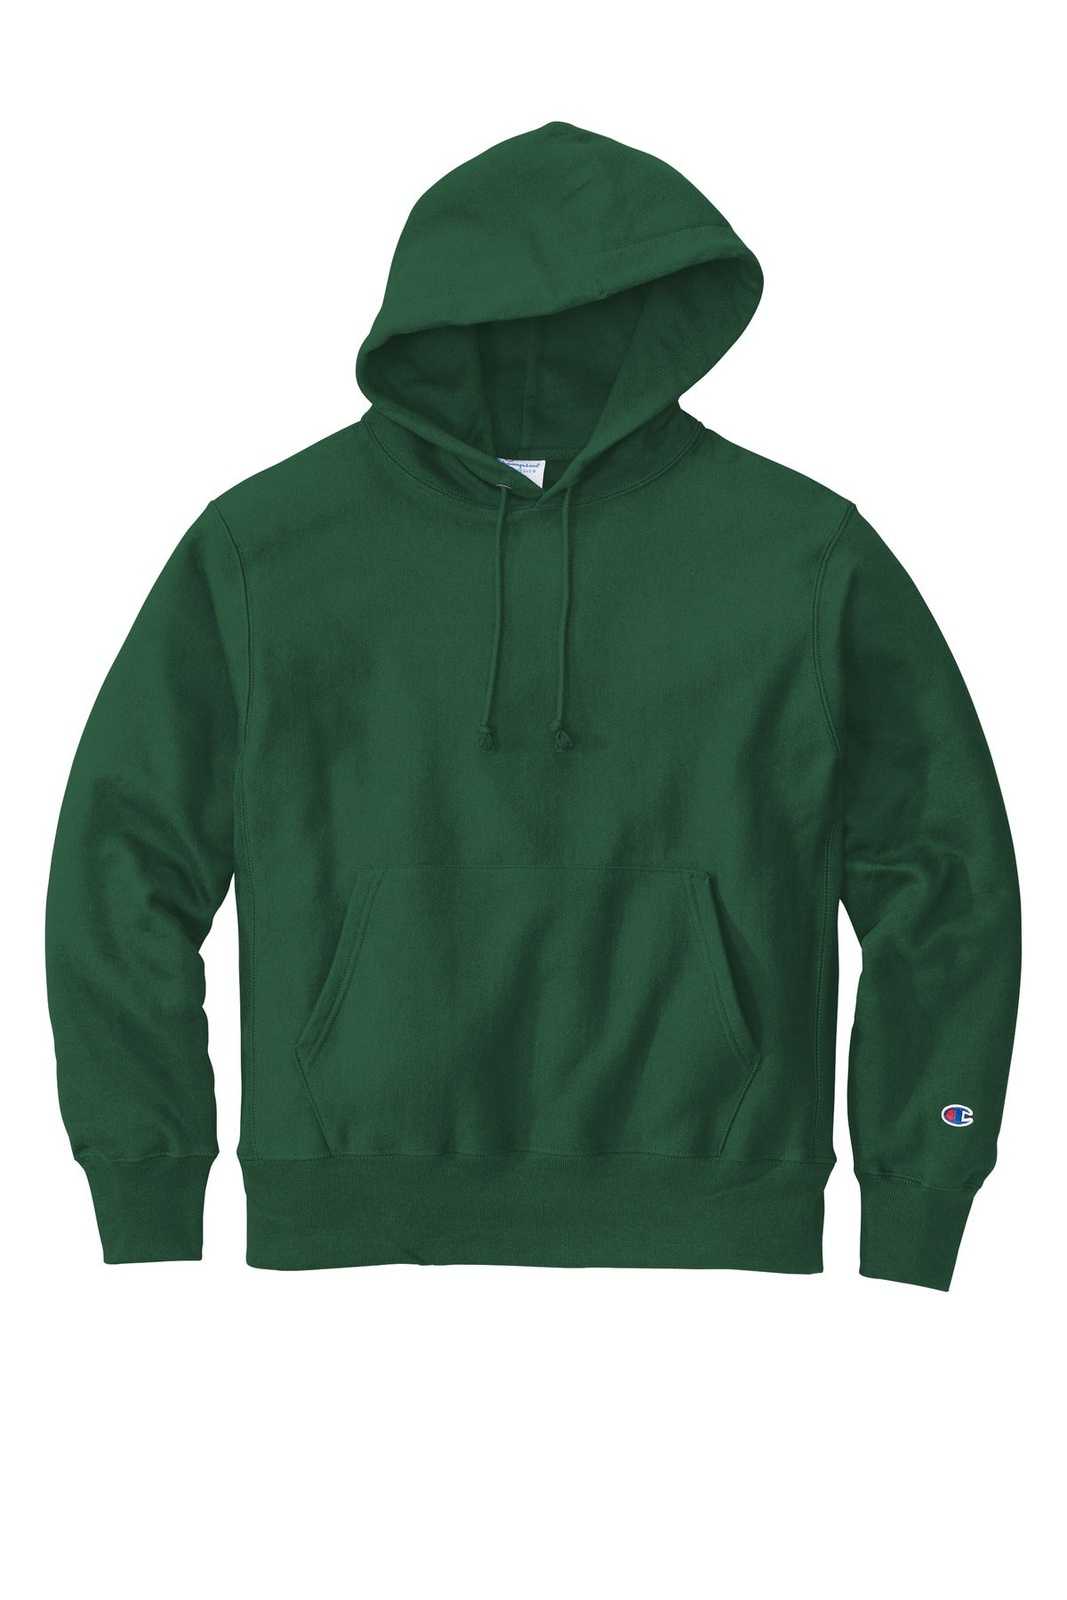 Champion S101 Reverse Weave Hooded Sweatshirt - Dark Green